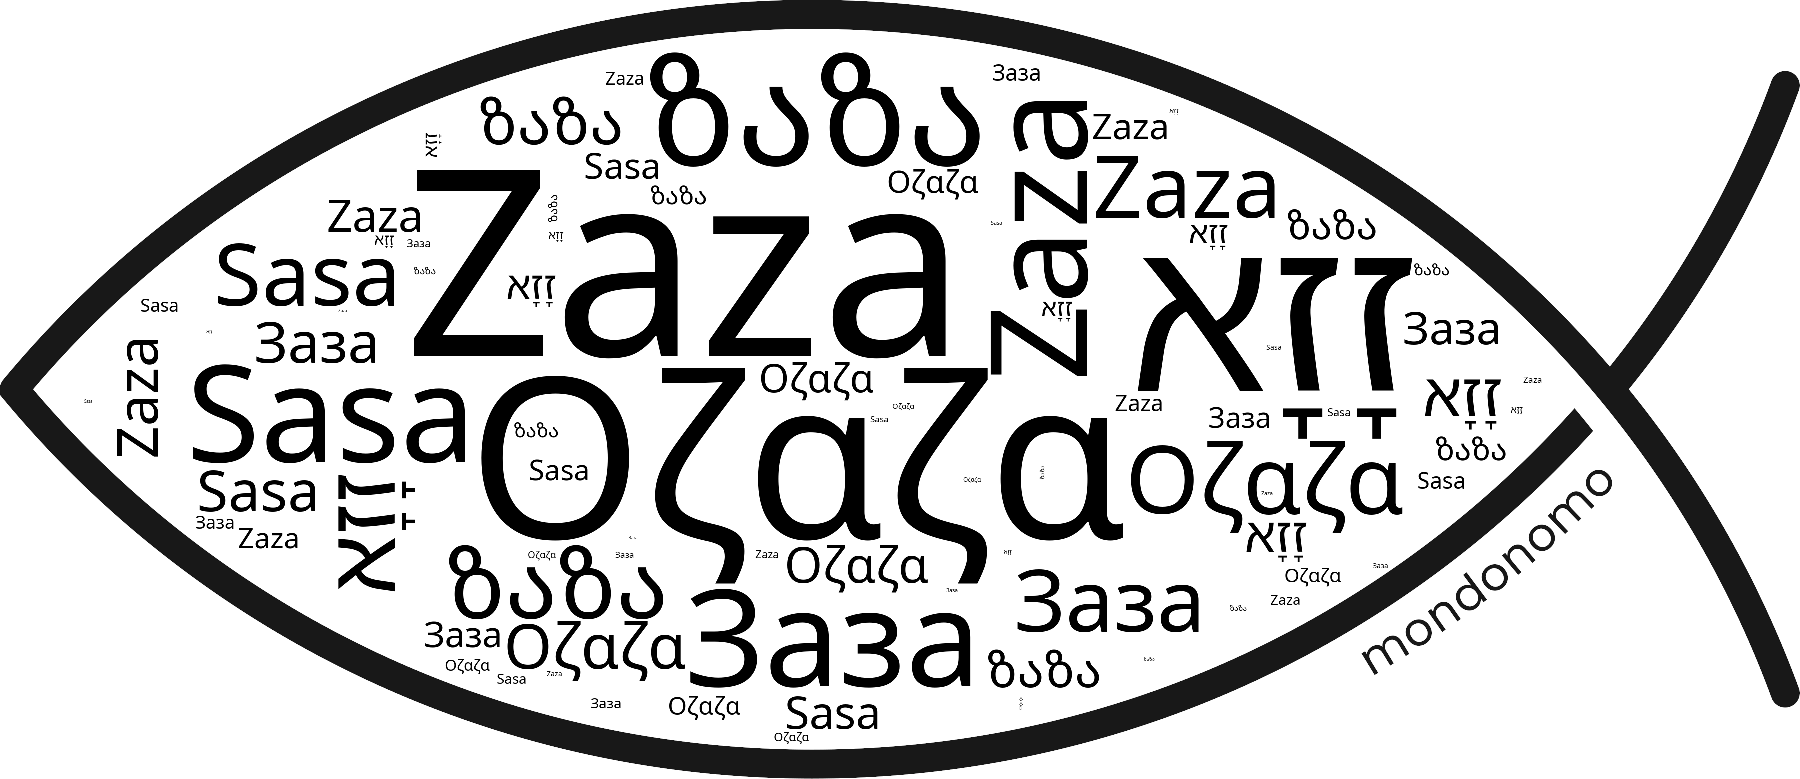 Name Zaza in the world's Bibles